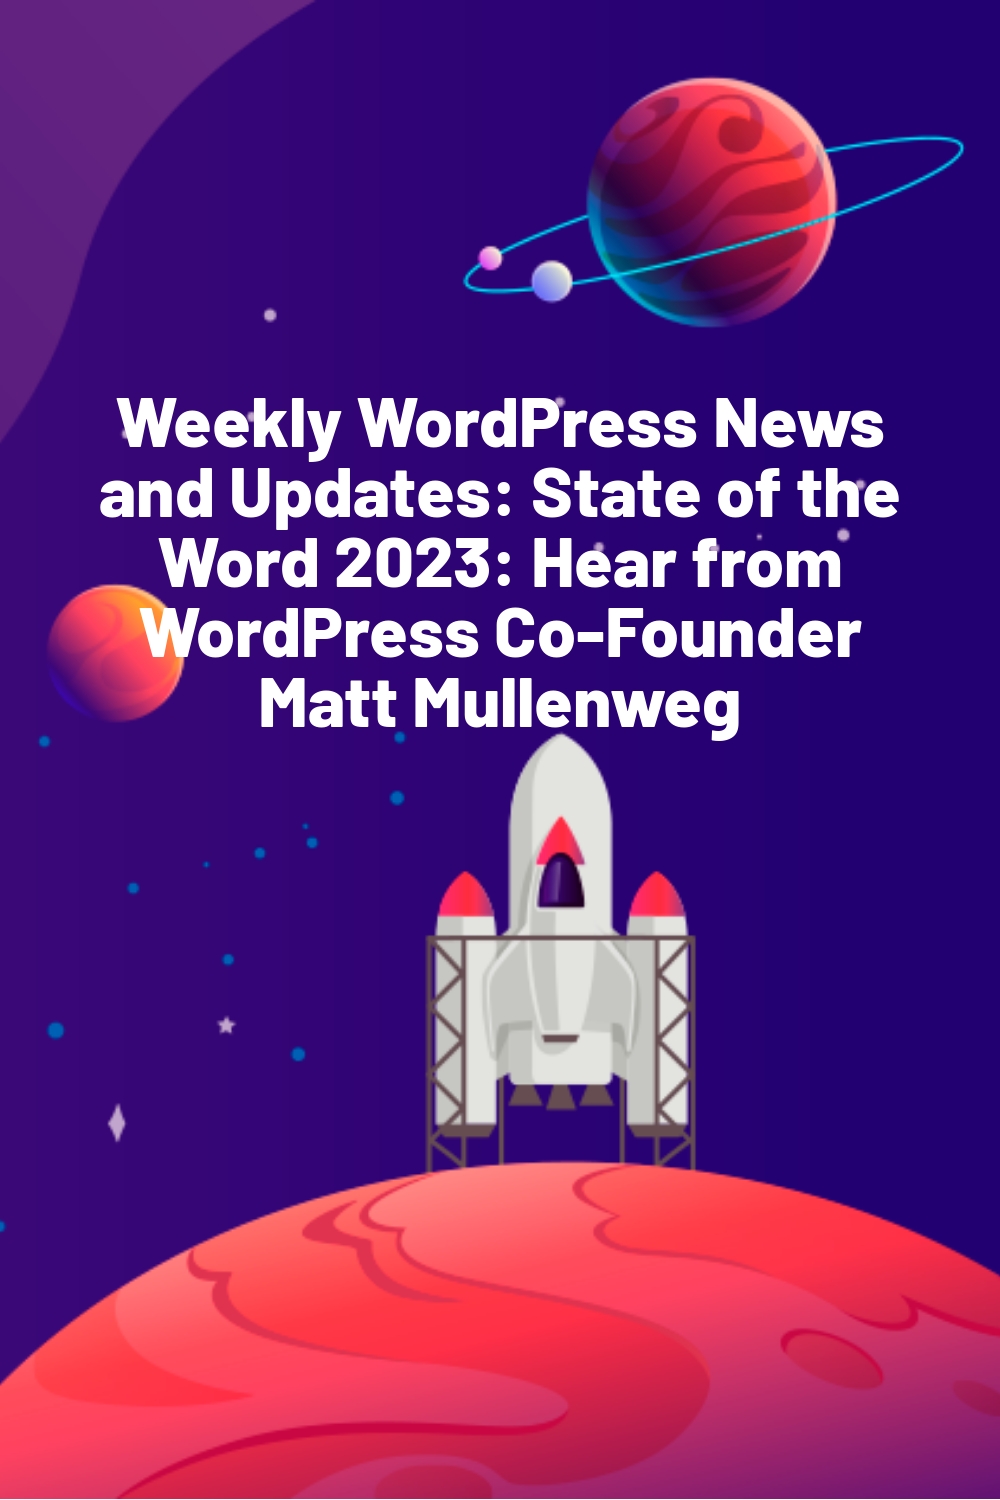 Weekly WordPress News and Updates: State of the Word 2023: Hear from WordPress Co-Founder Matt Mullenweg